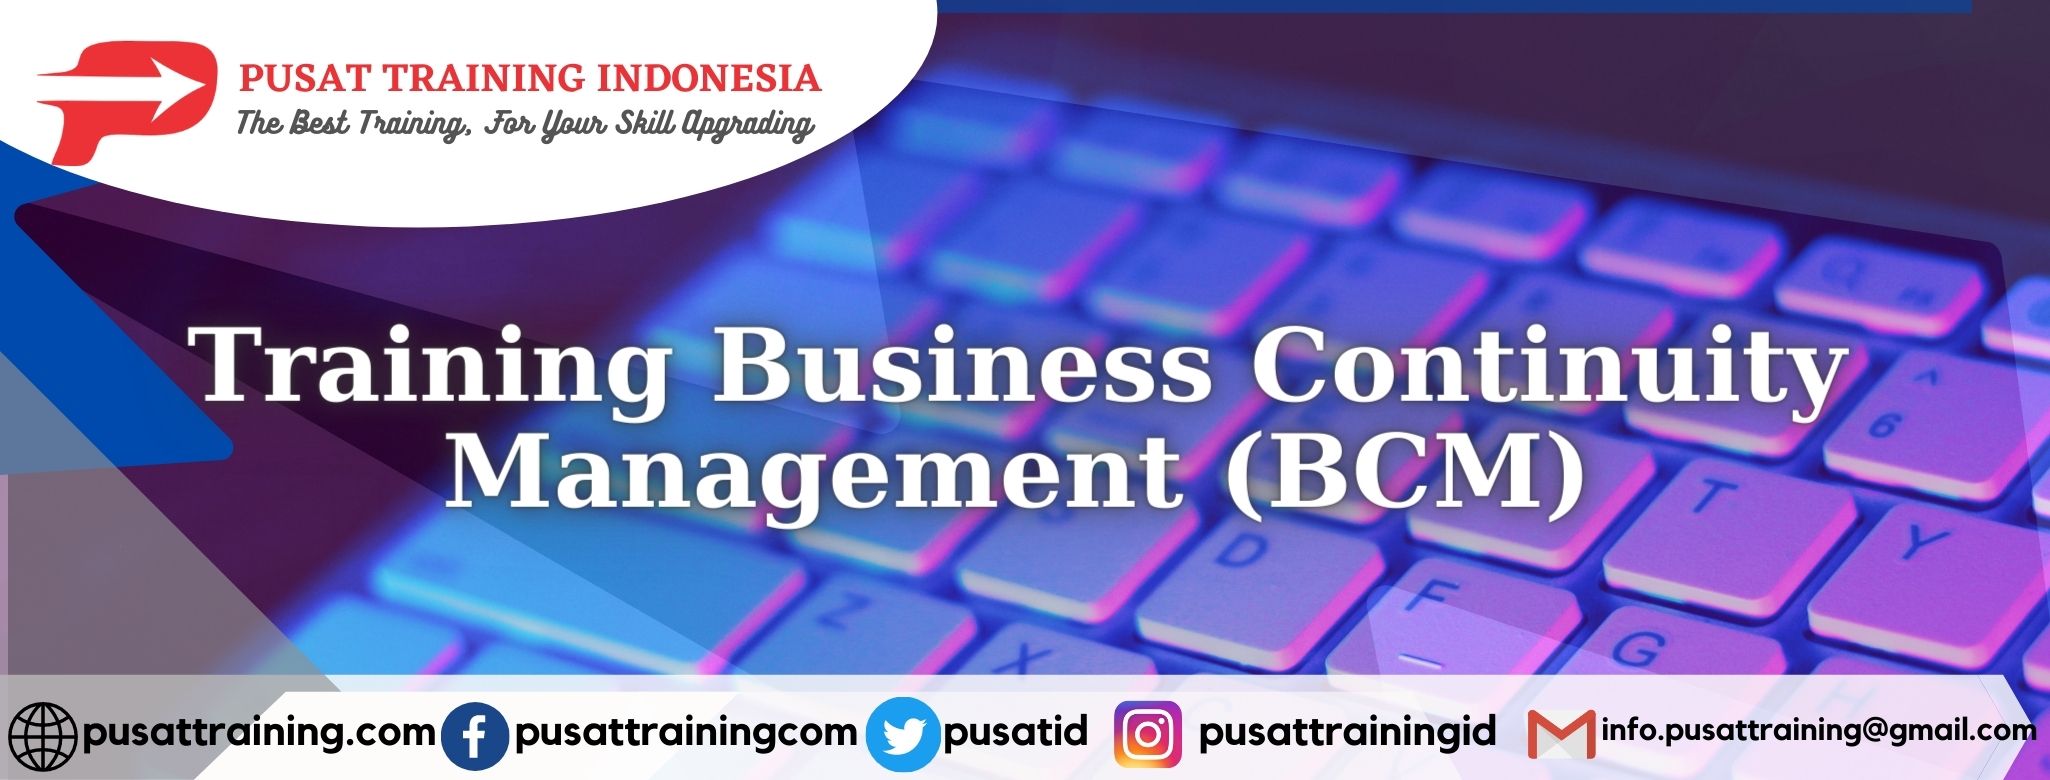 Training-Business-Continuity-Management-BCM